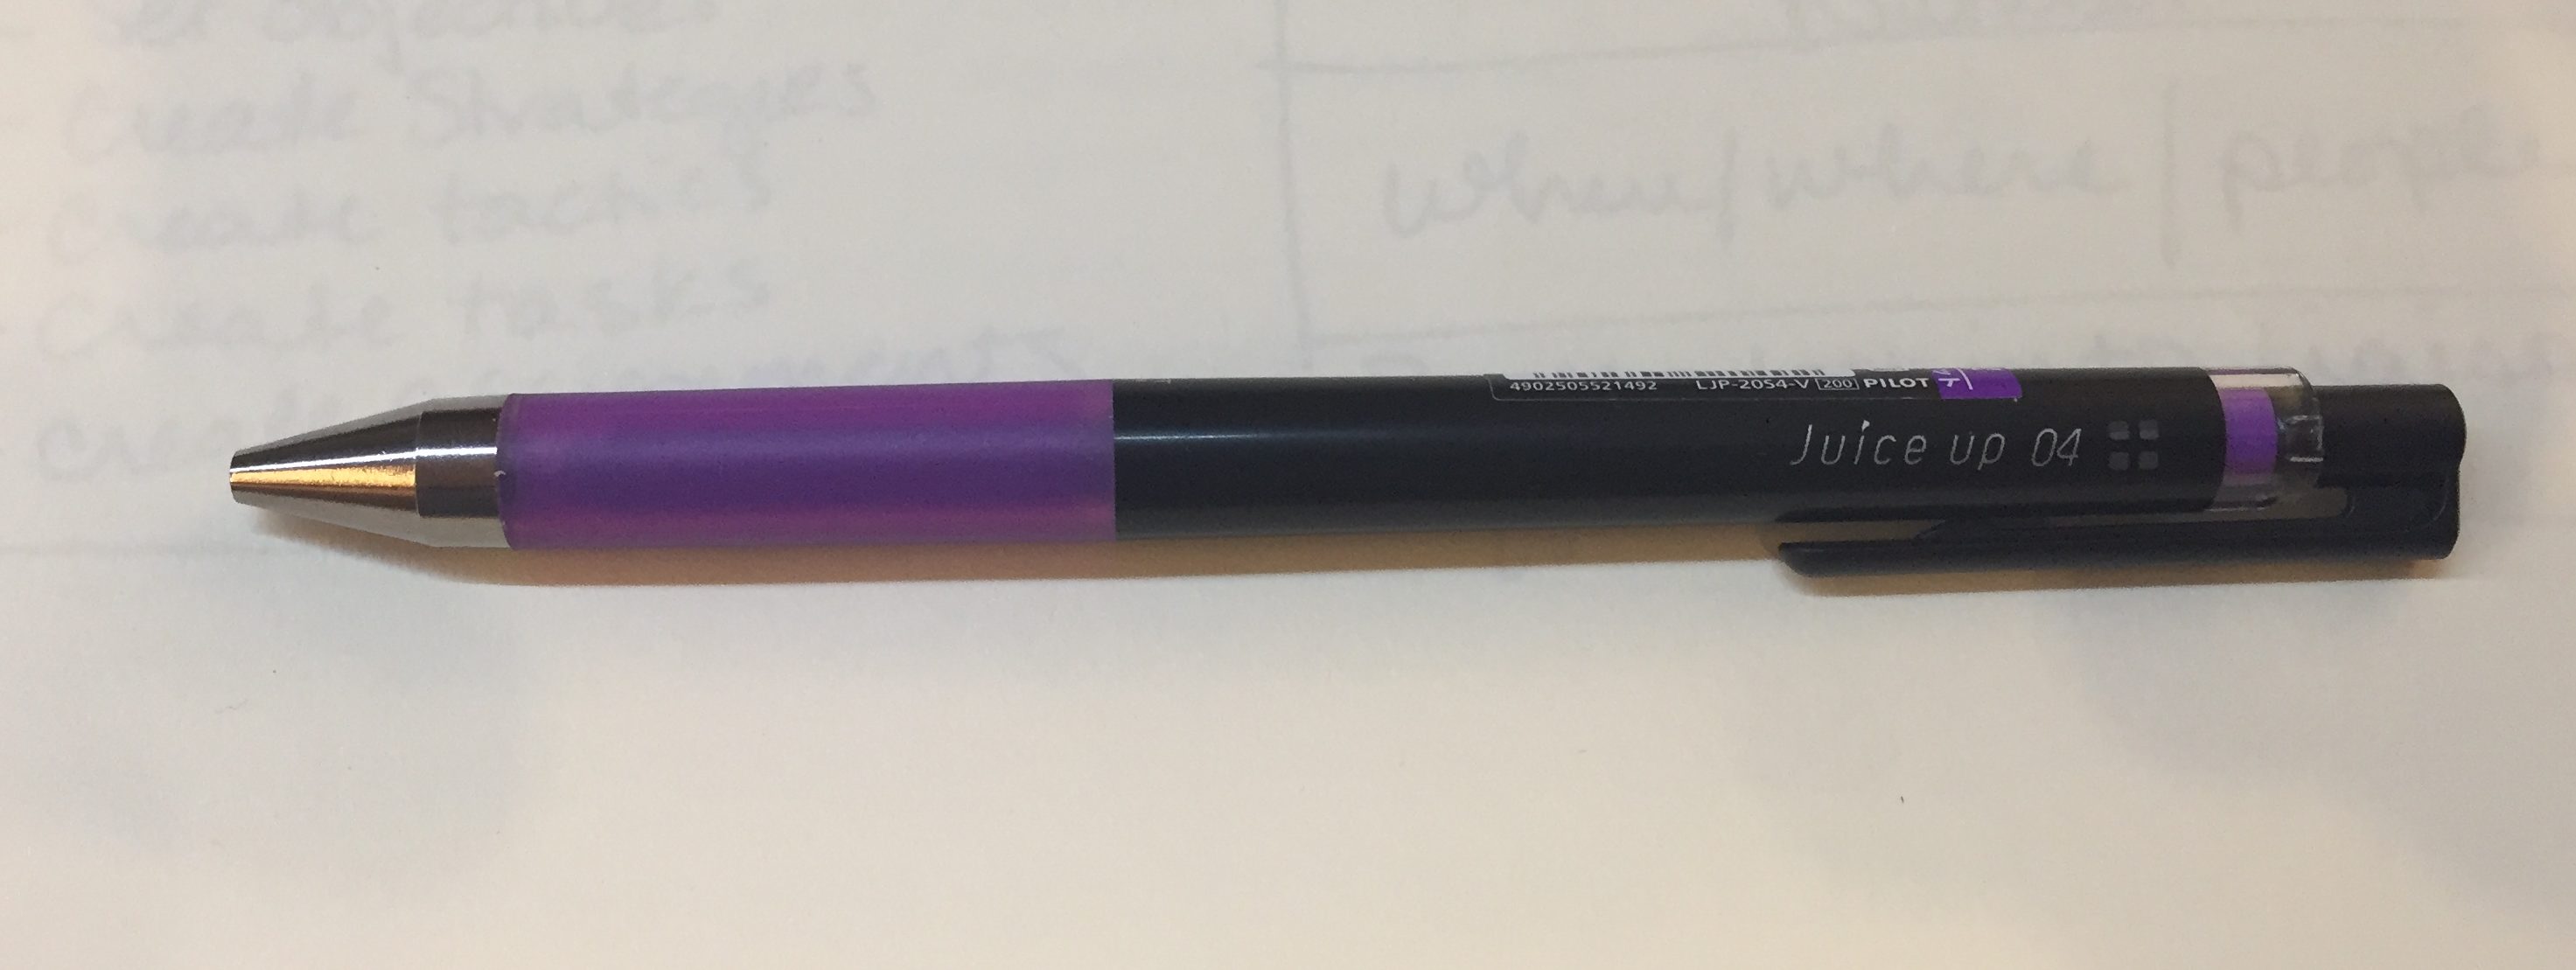 Pen/Pencil Review] Pilot Juice Up 0.4mm Black Ink – Rhonda Eudaly